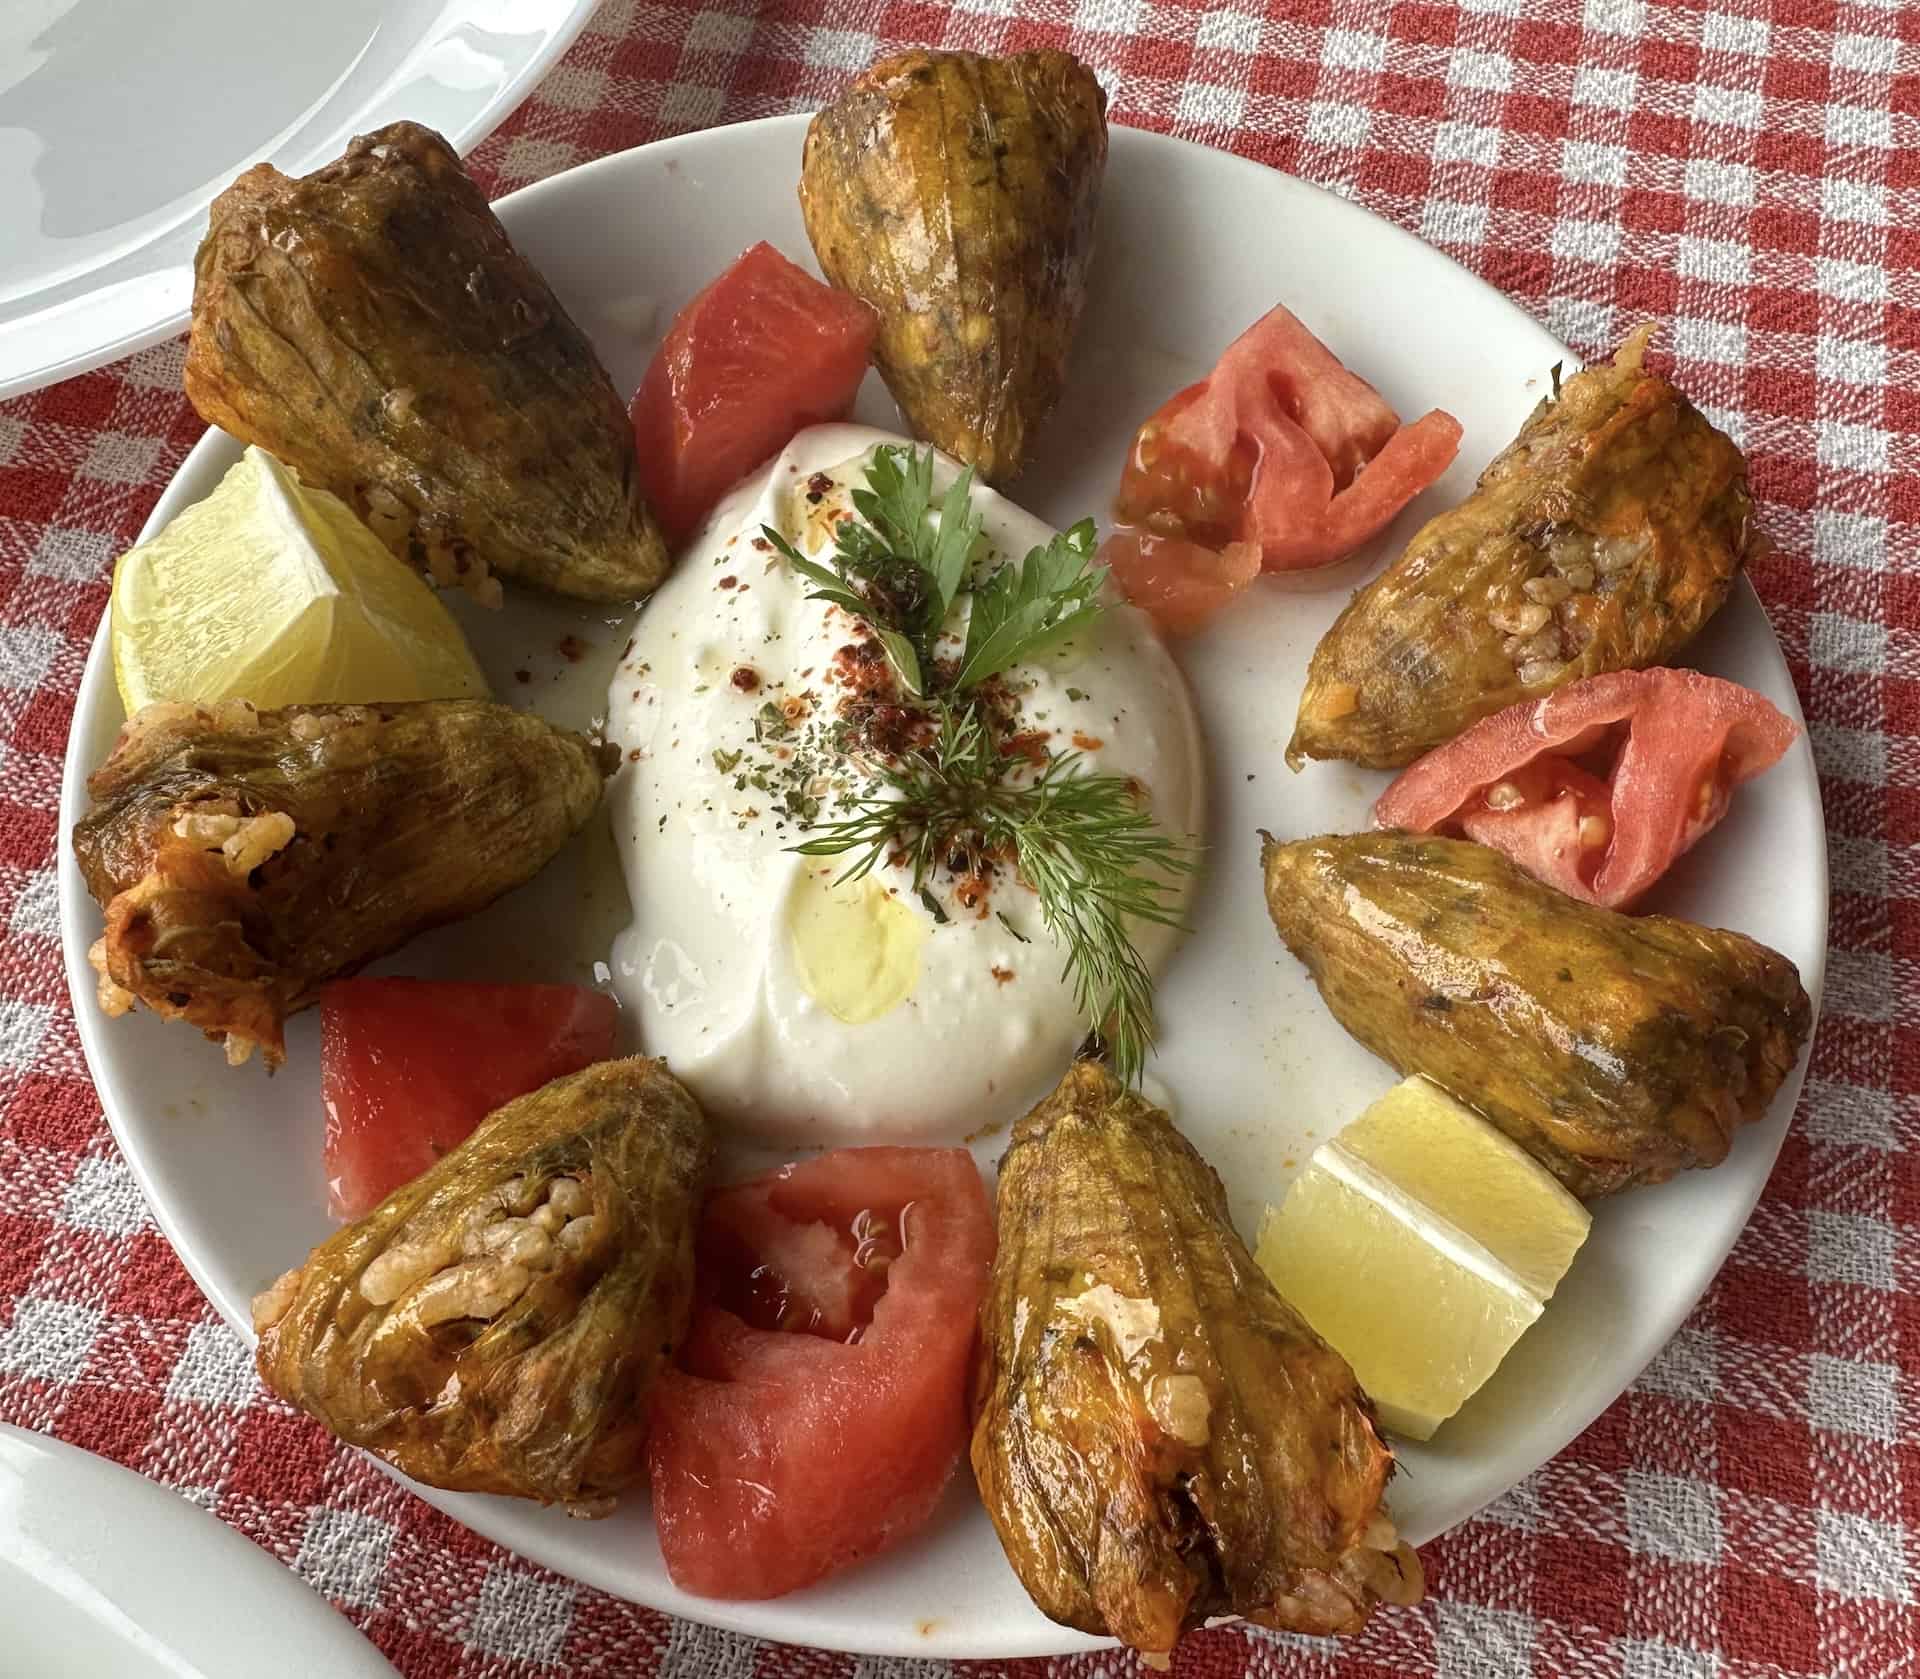 Stuffed zucchini flowers at Panorama Restaurant in Şirince, Turkey